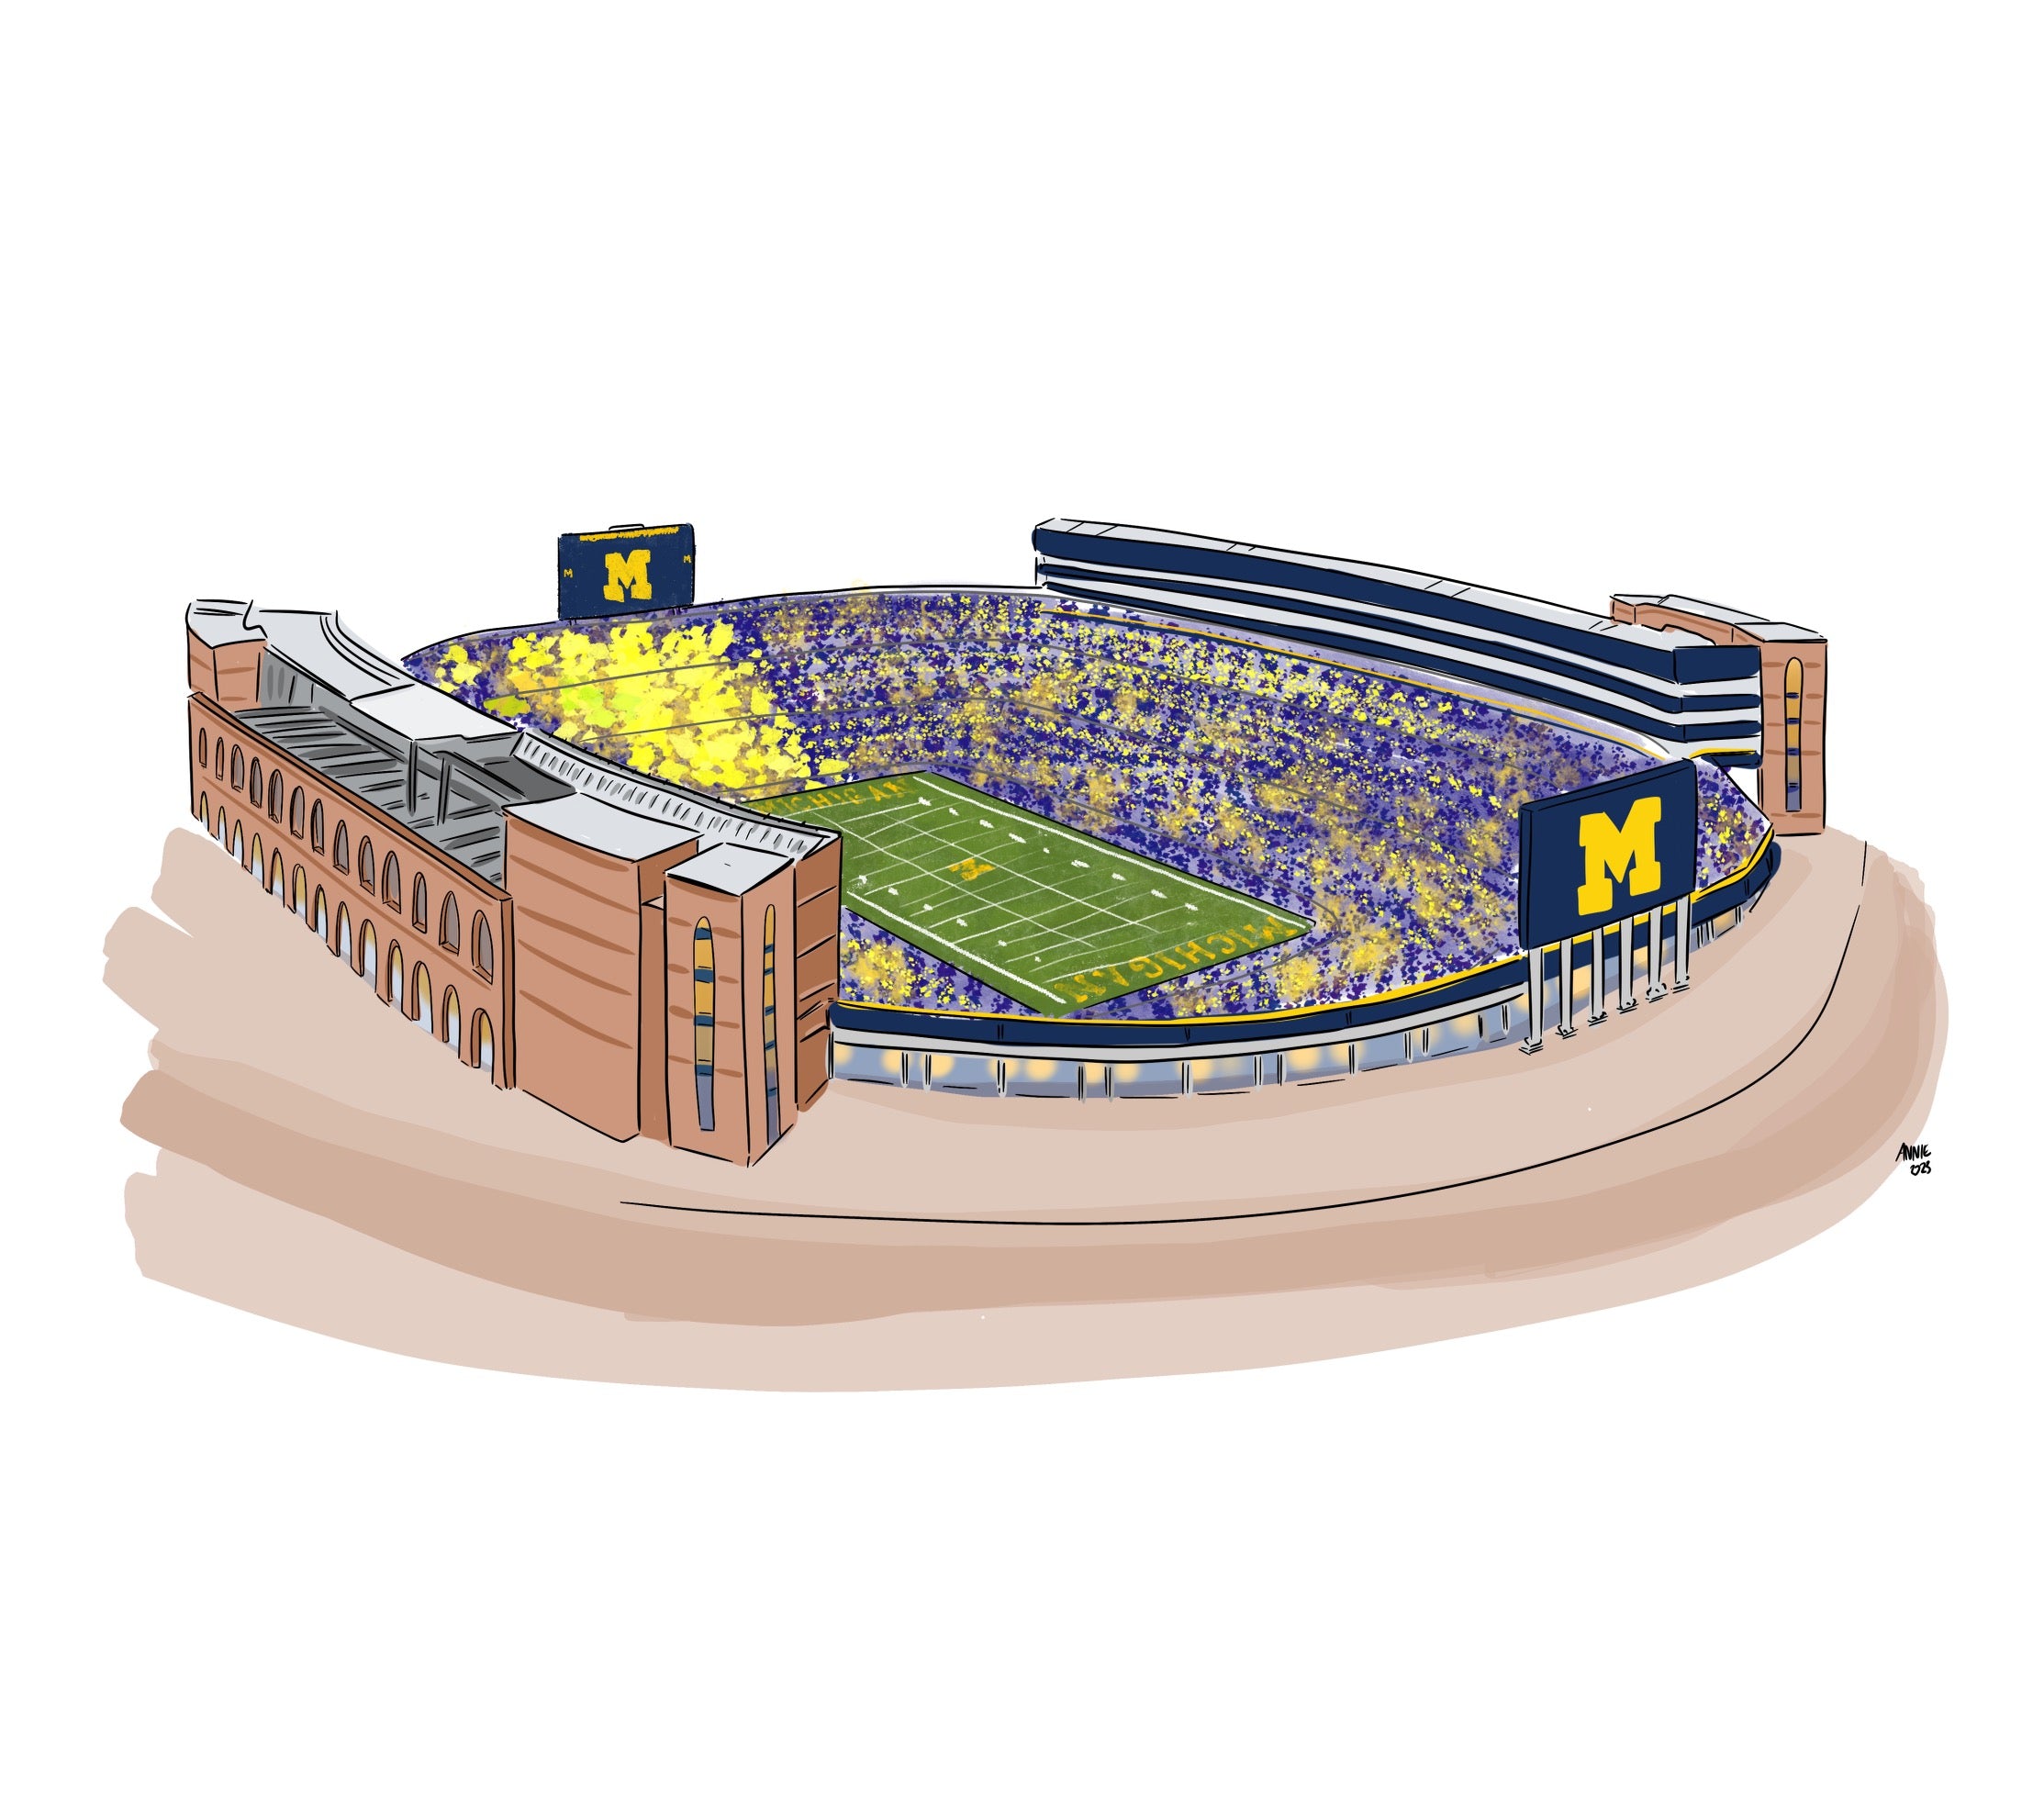 The Big House - University of Michigan